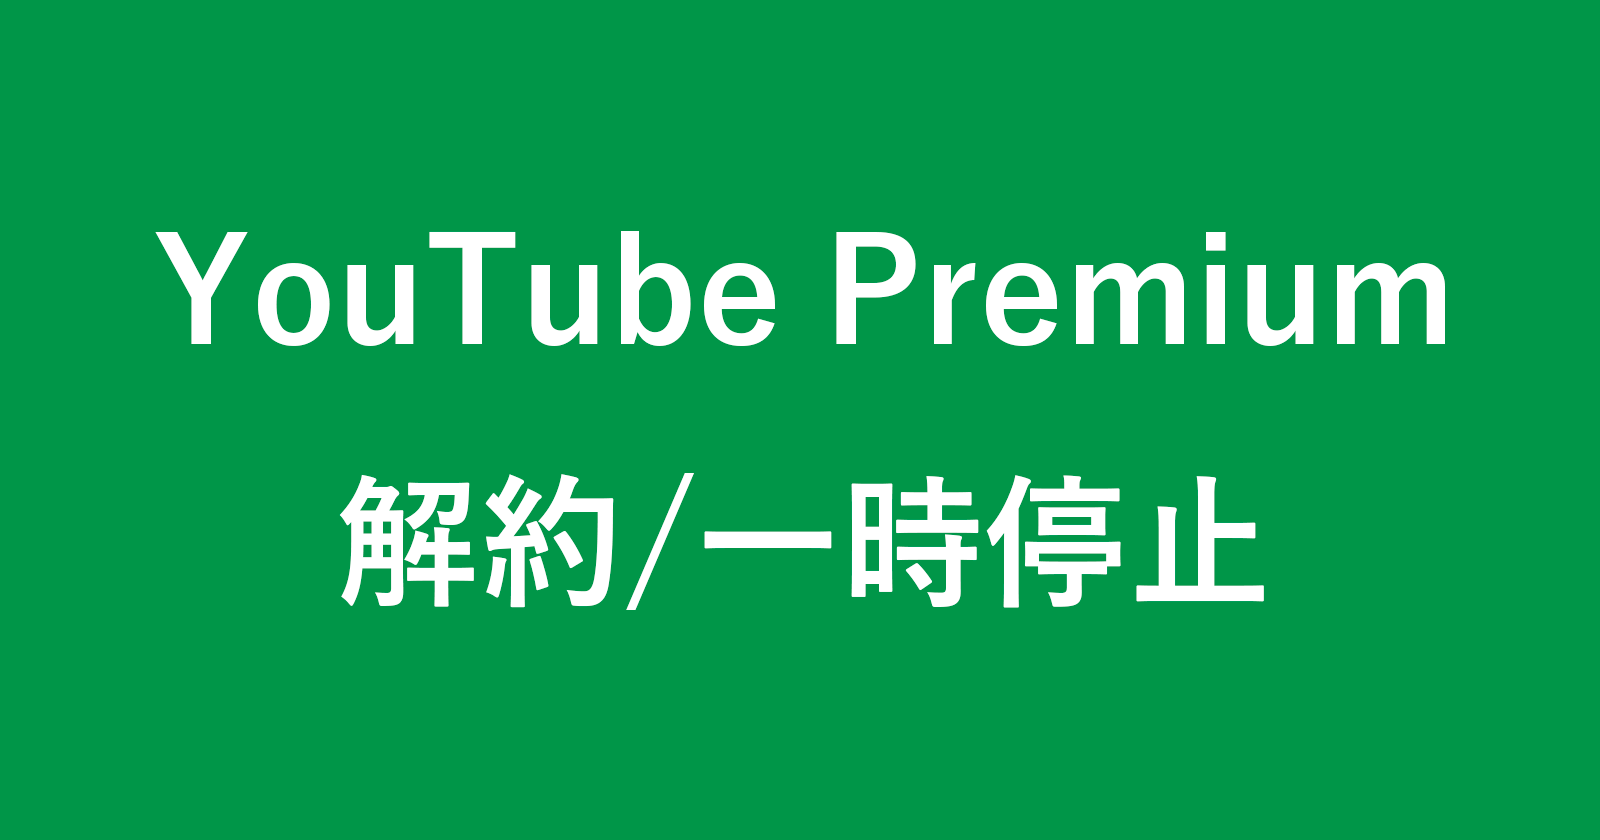 youtube premium cancel